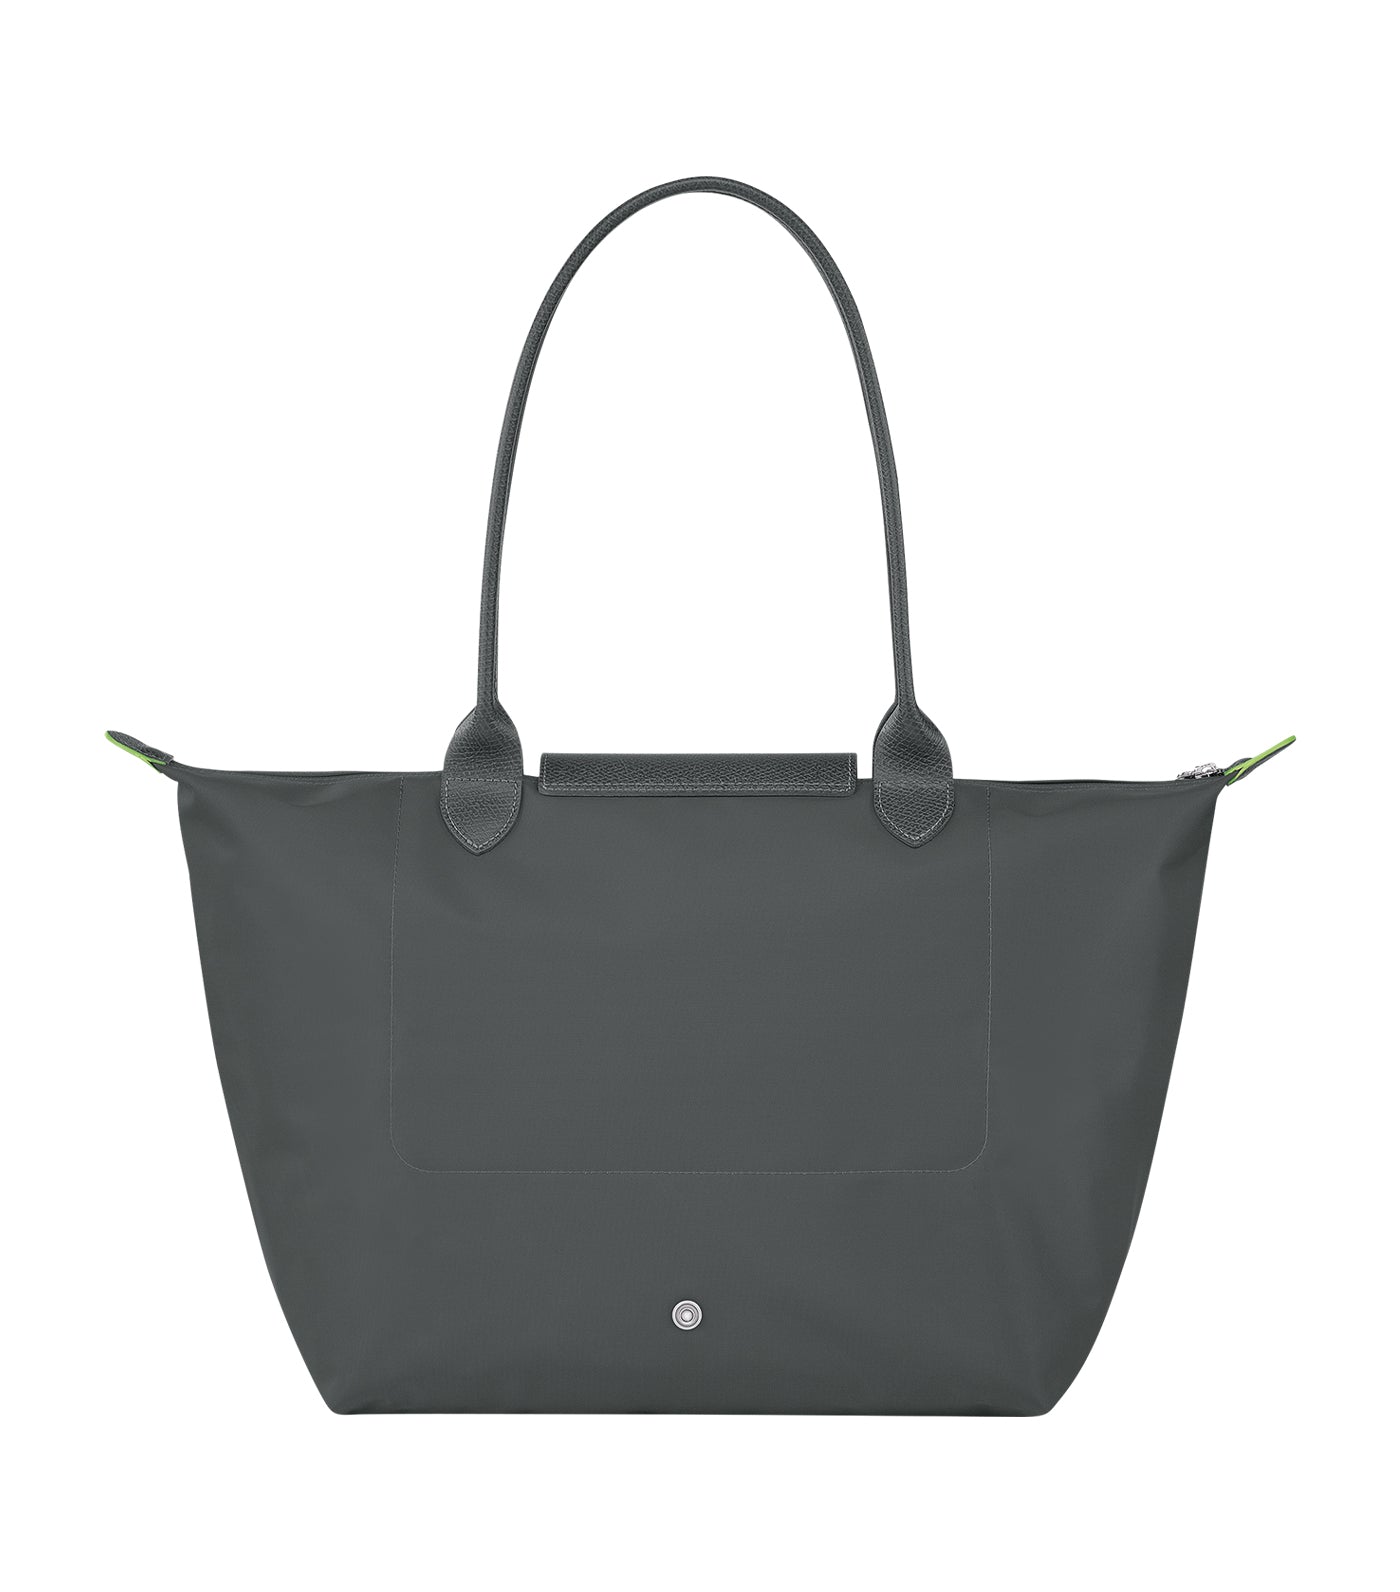 Longchamp Classic Le Pliage Nylon Long Strap Shoulder Bag in Gray